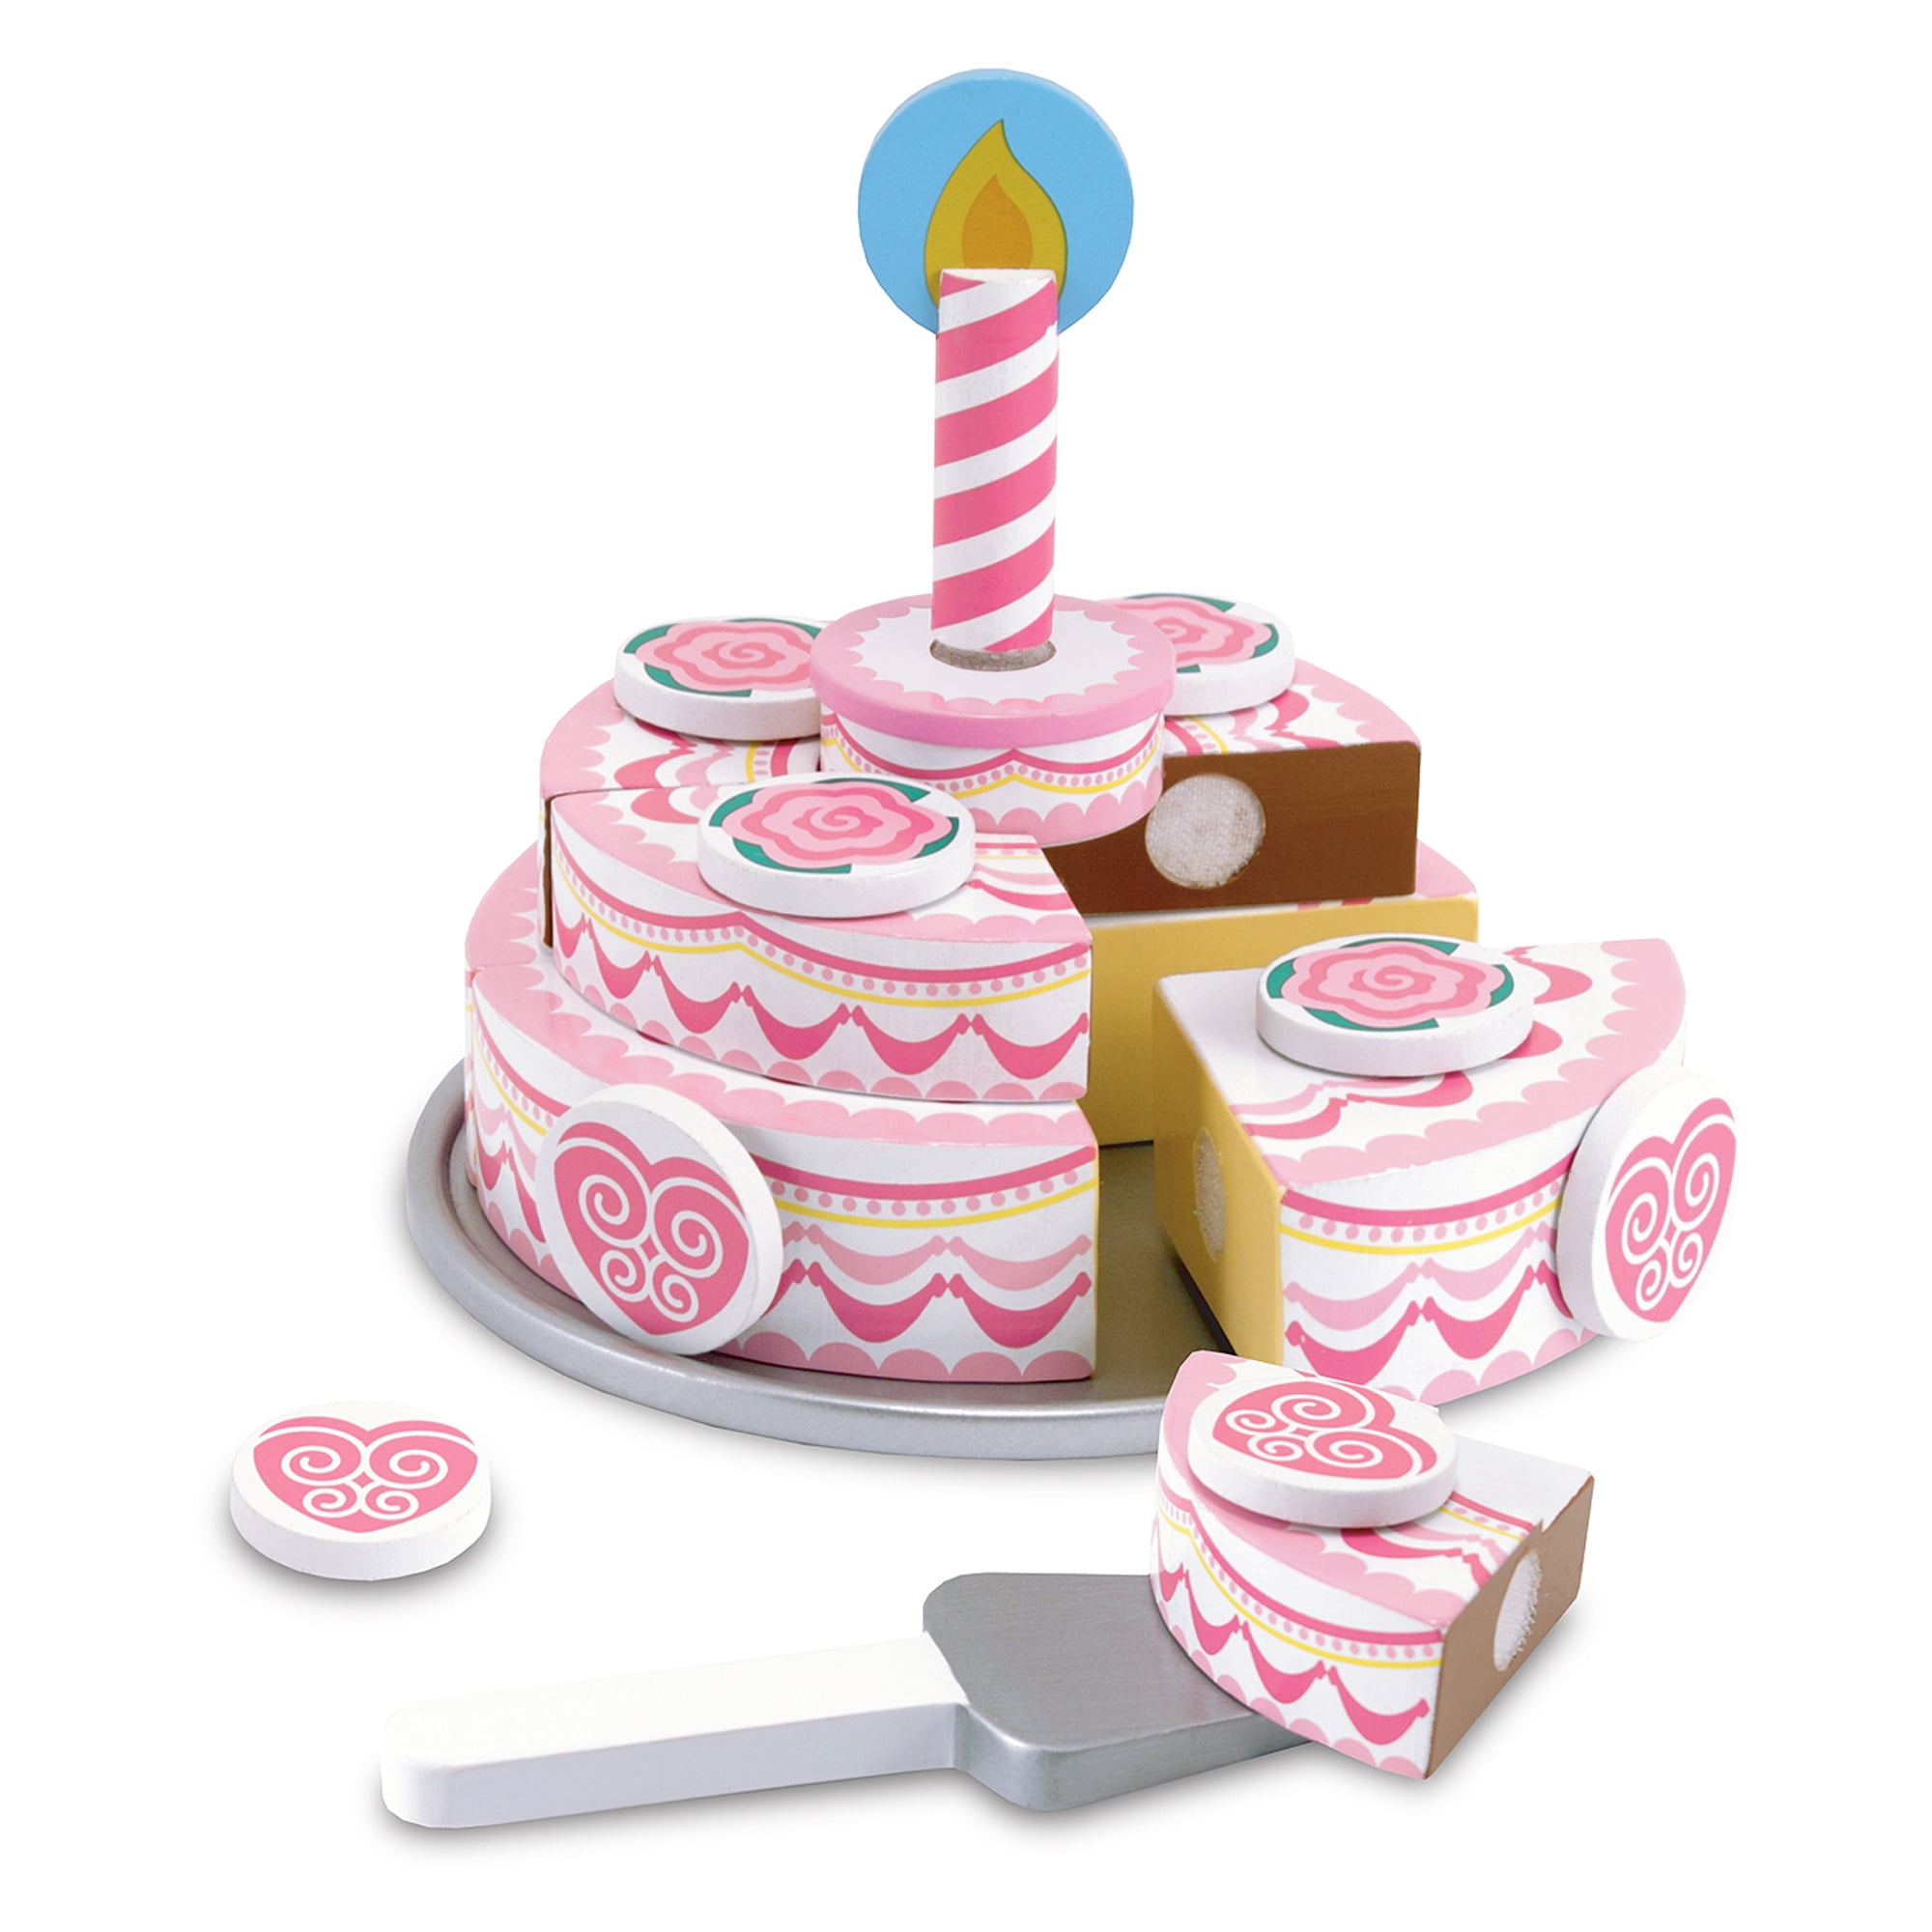 Melissa & Doug Wooden Bake and Decorate Cupcake Set..BRAND NEW 